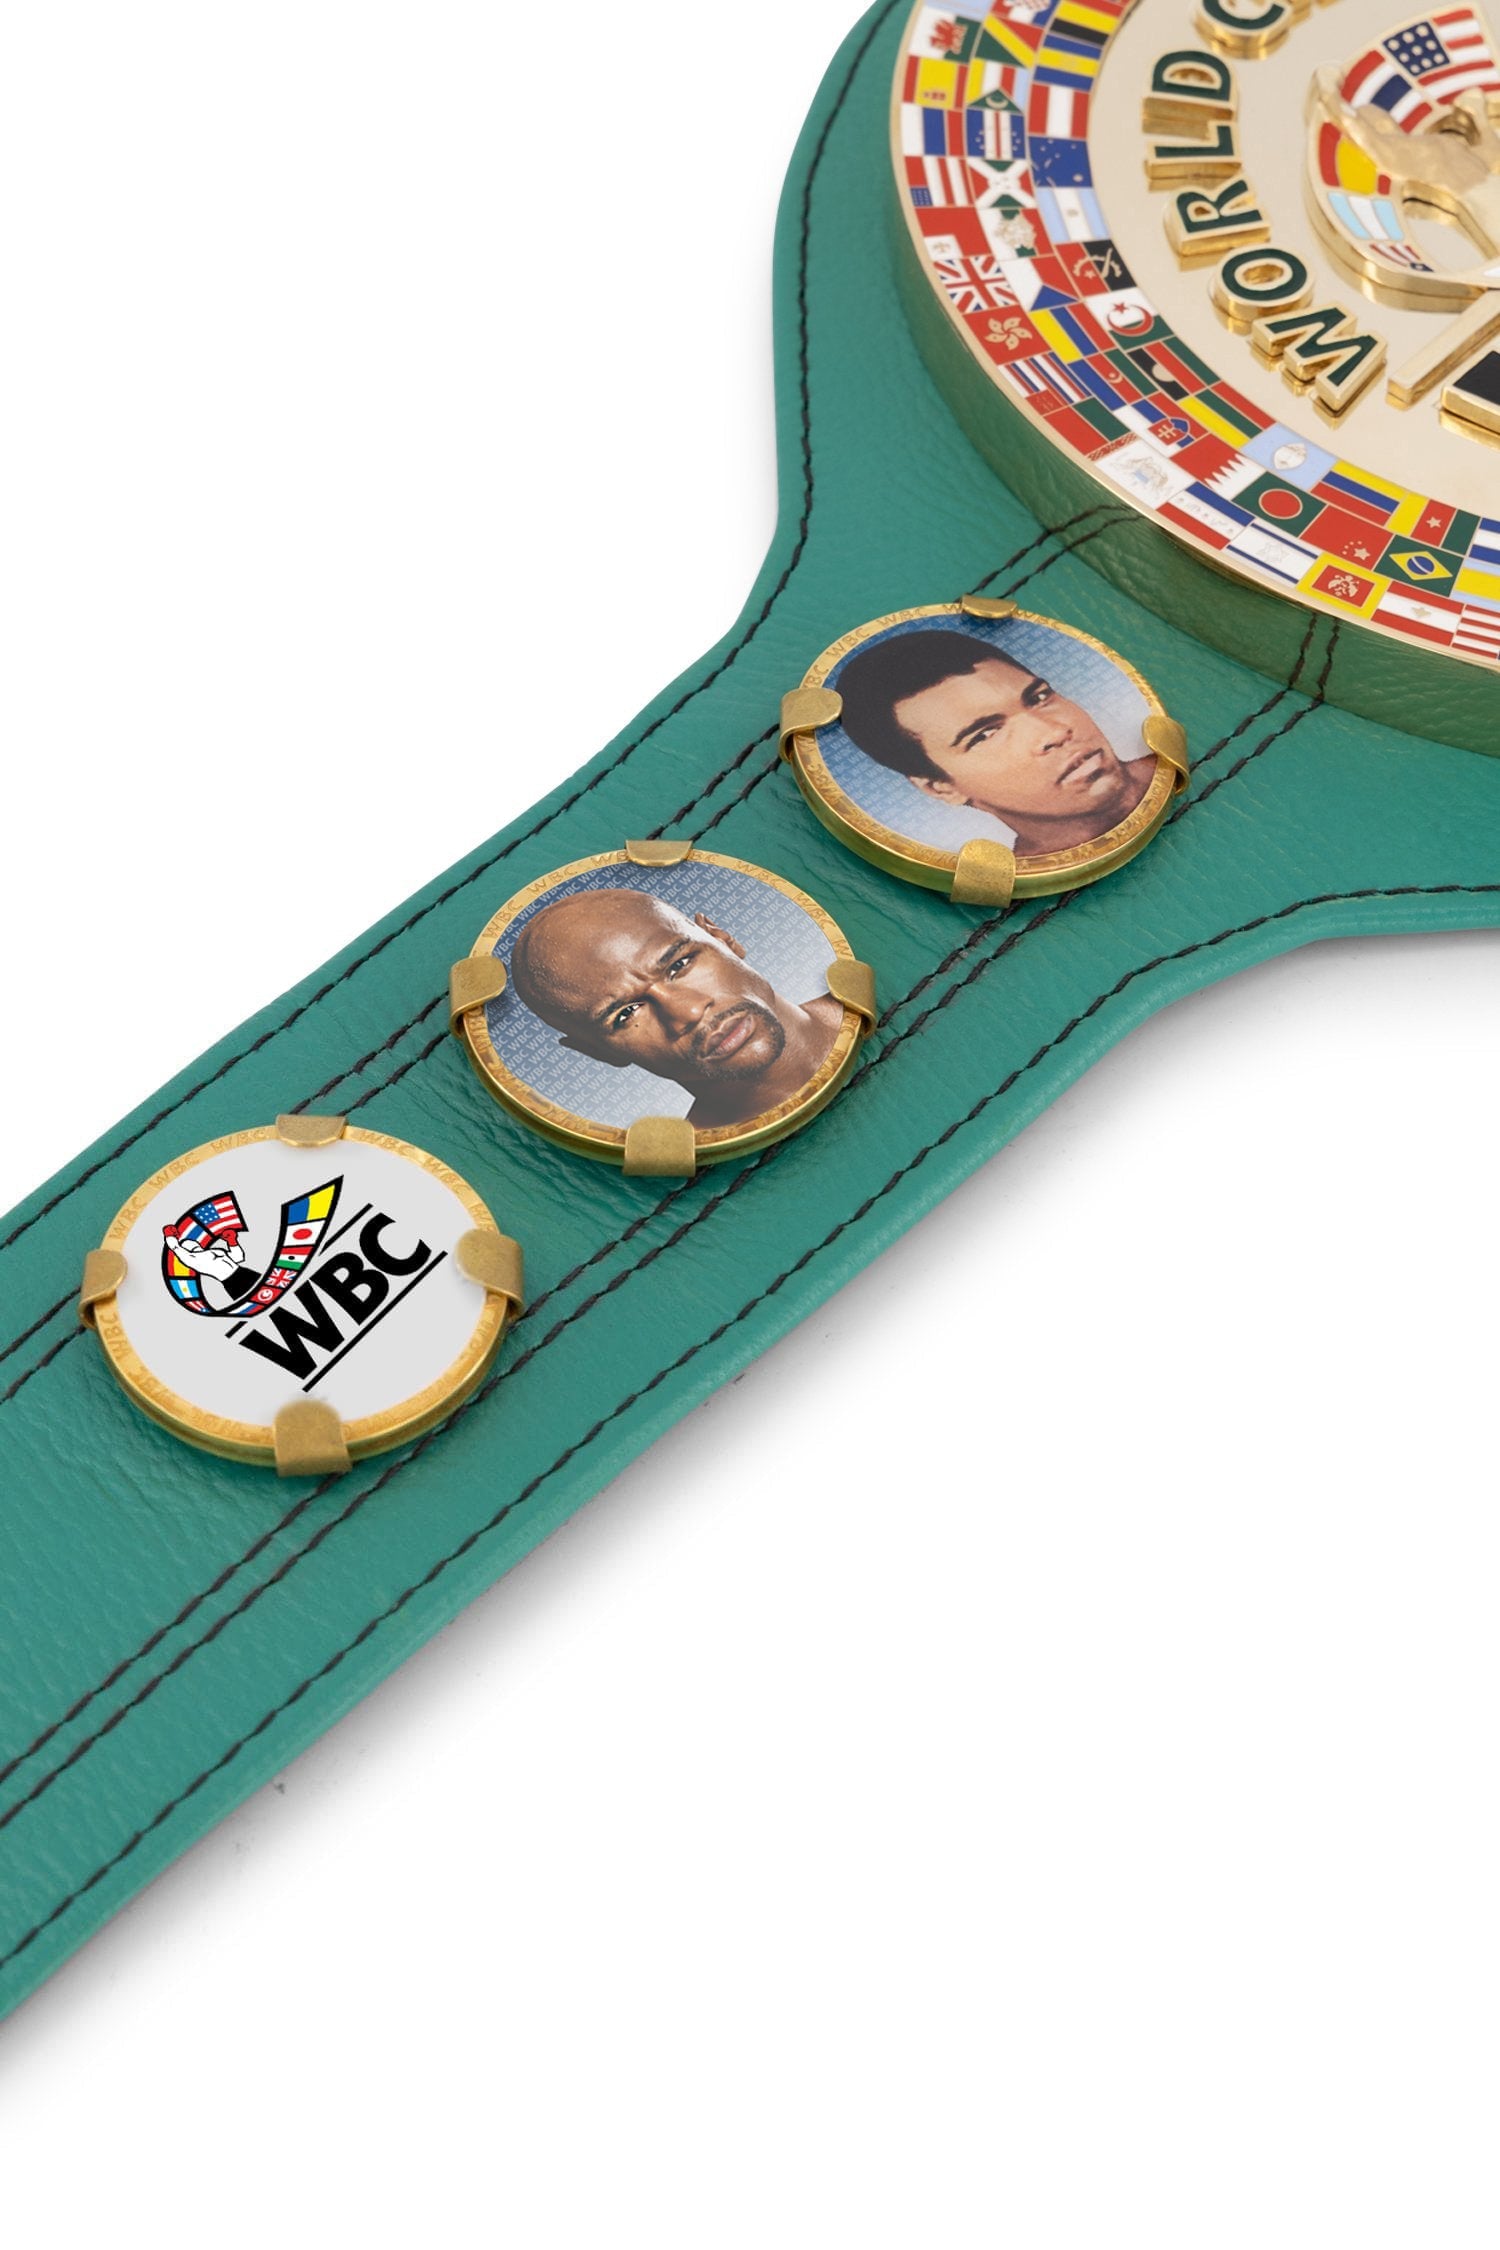 WBC Store Replica Belts WBC Championship Belt  "Historic Fights" Floyd Mayweather Jr. vs. Víctor Ortiz